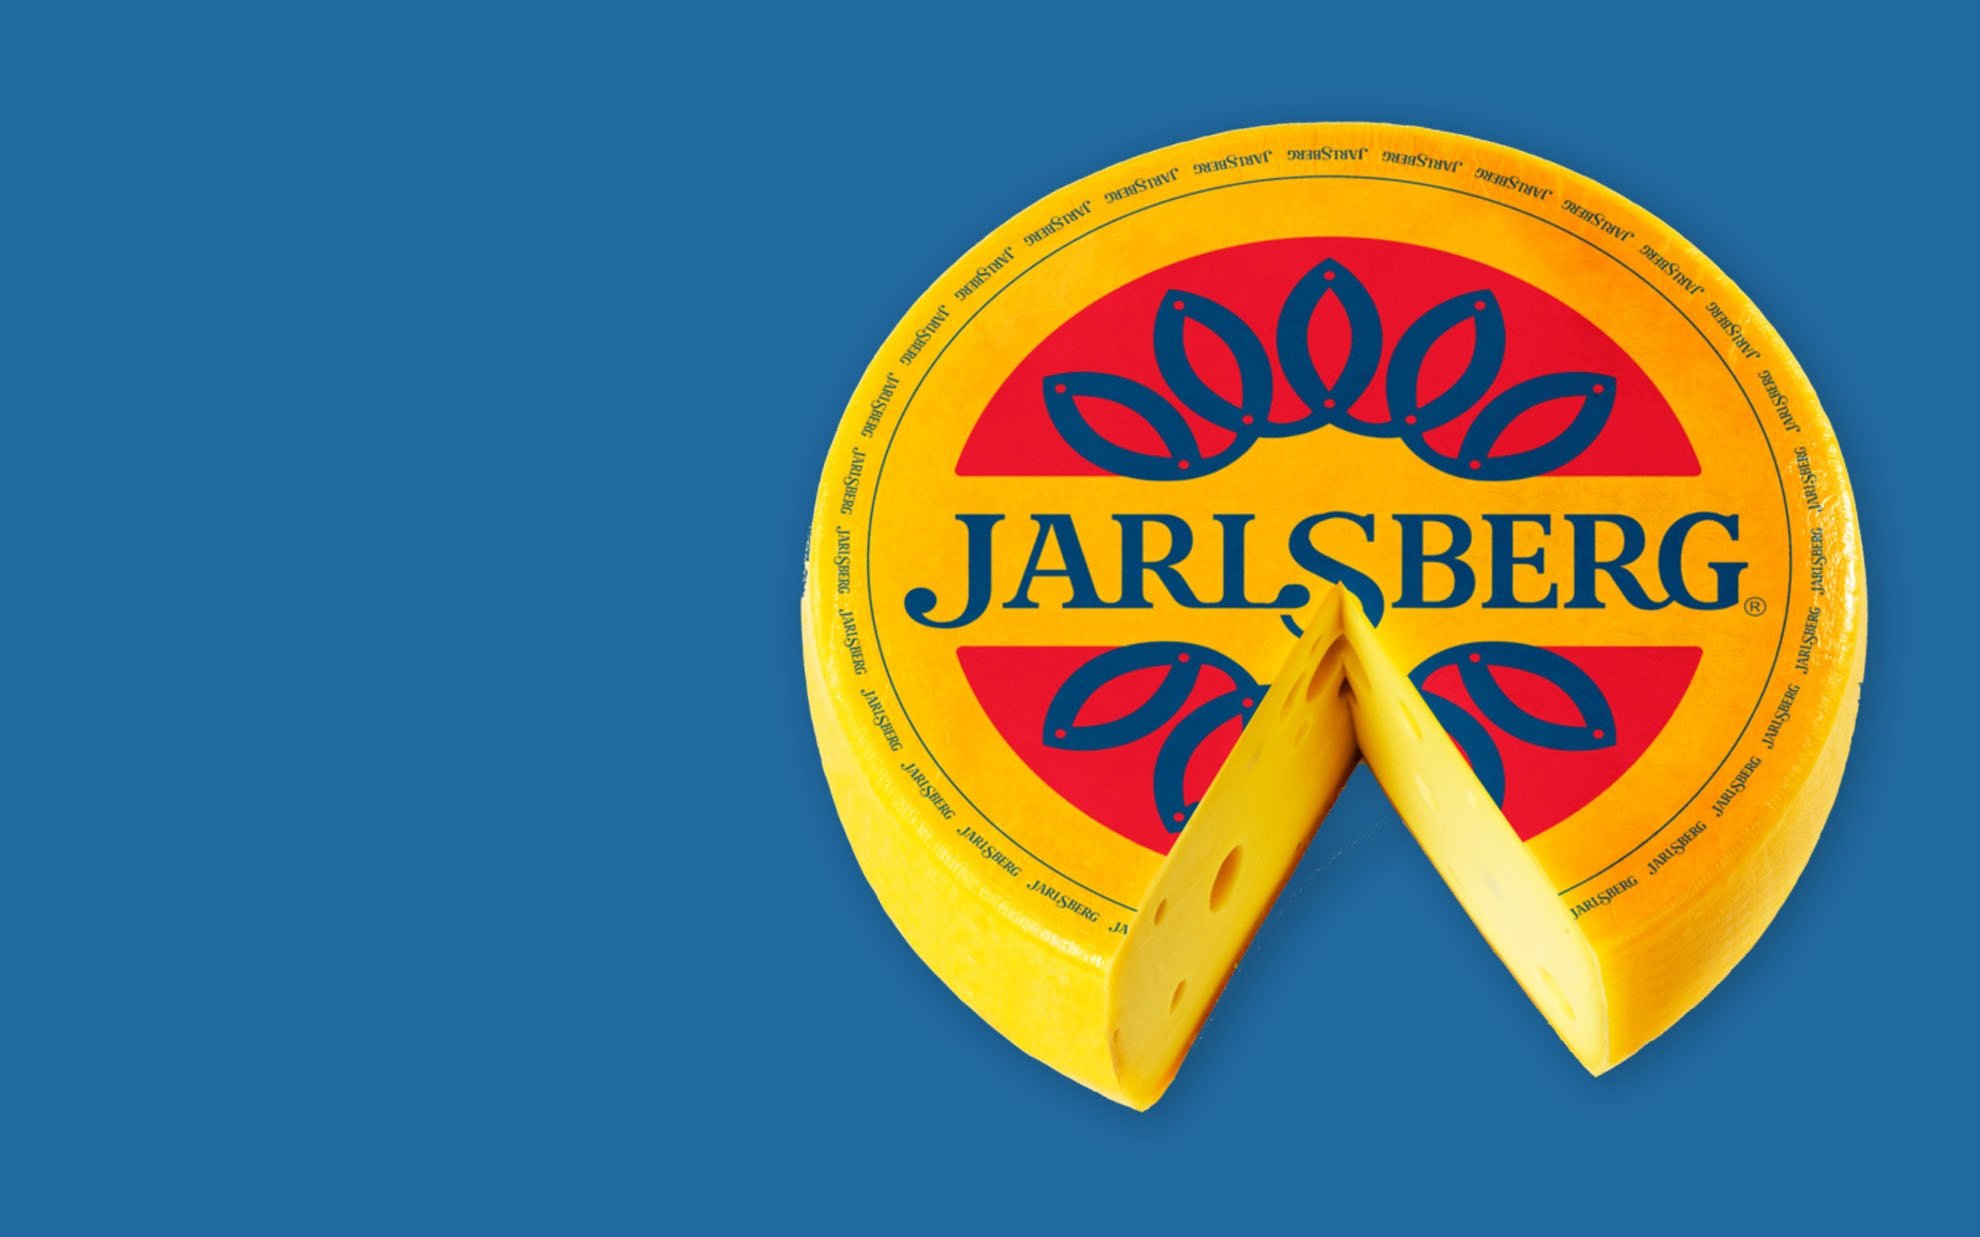 The jarlsberg Burger story - US